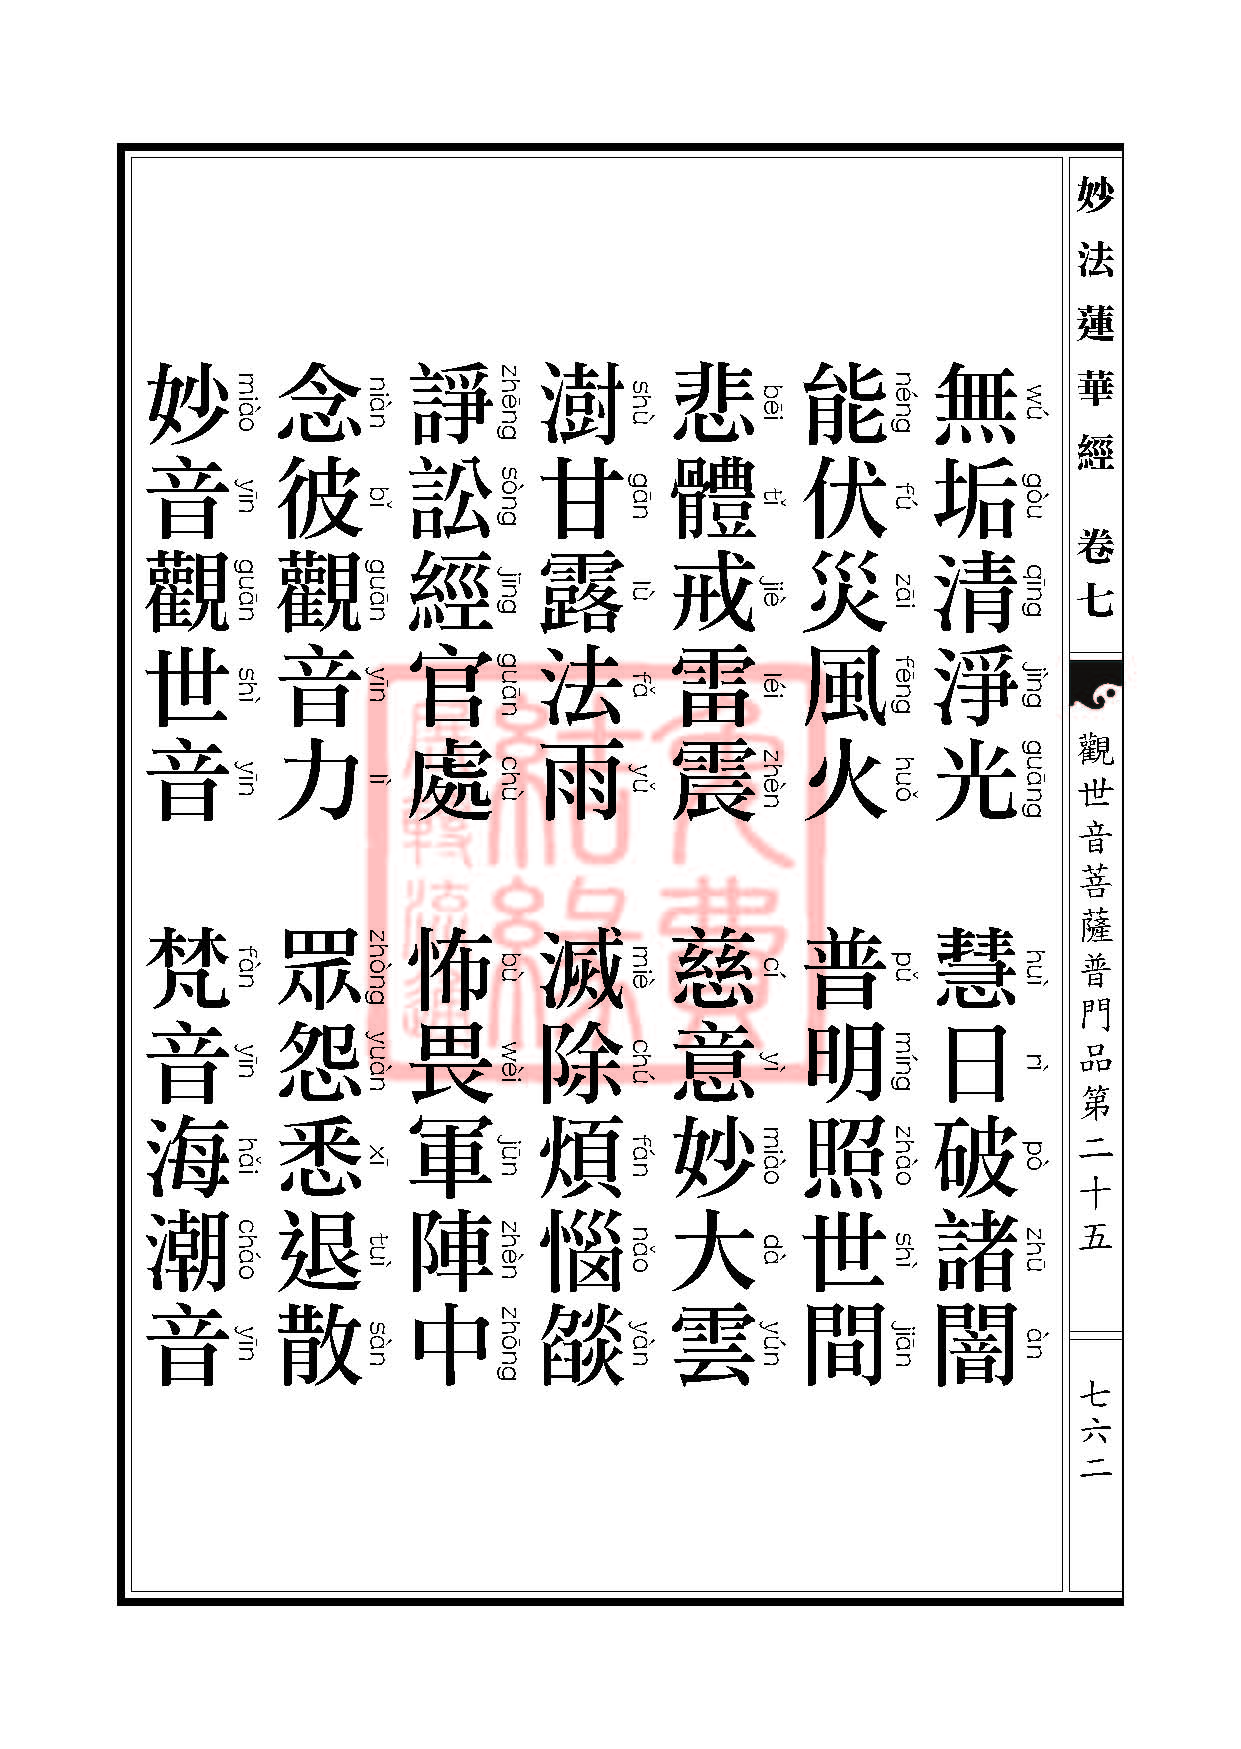 Book_FHJ_HK-A6-PY_Web_页面_762.jpg